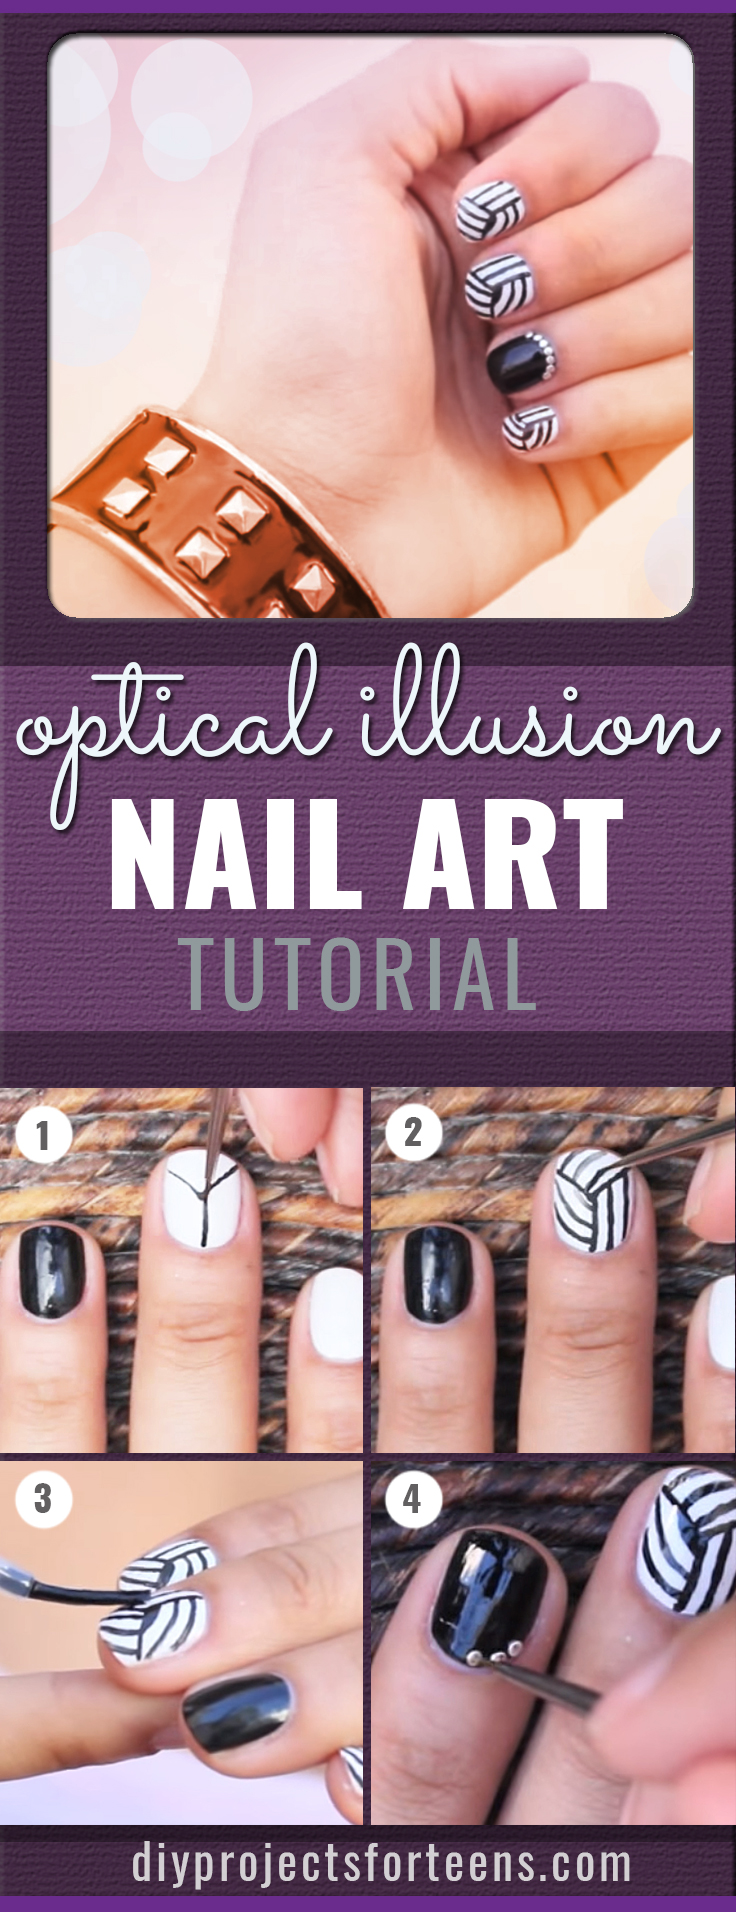 Cool Nail Art Ideas - DIY Optical Illusion Nail art Tutorial - Fun Nail Art - Fun and Easy DIY Nail Designs - Step By Step Tutorials and Instructions for Manicures at Home -